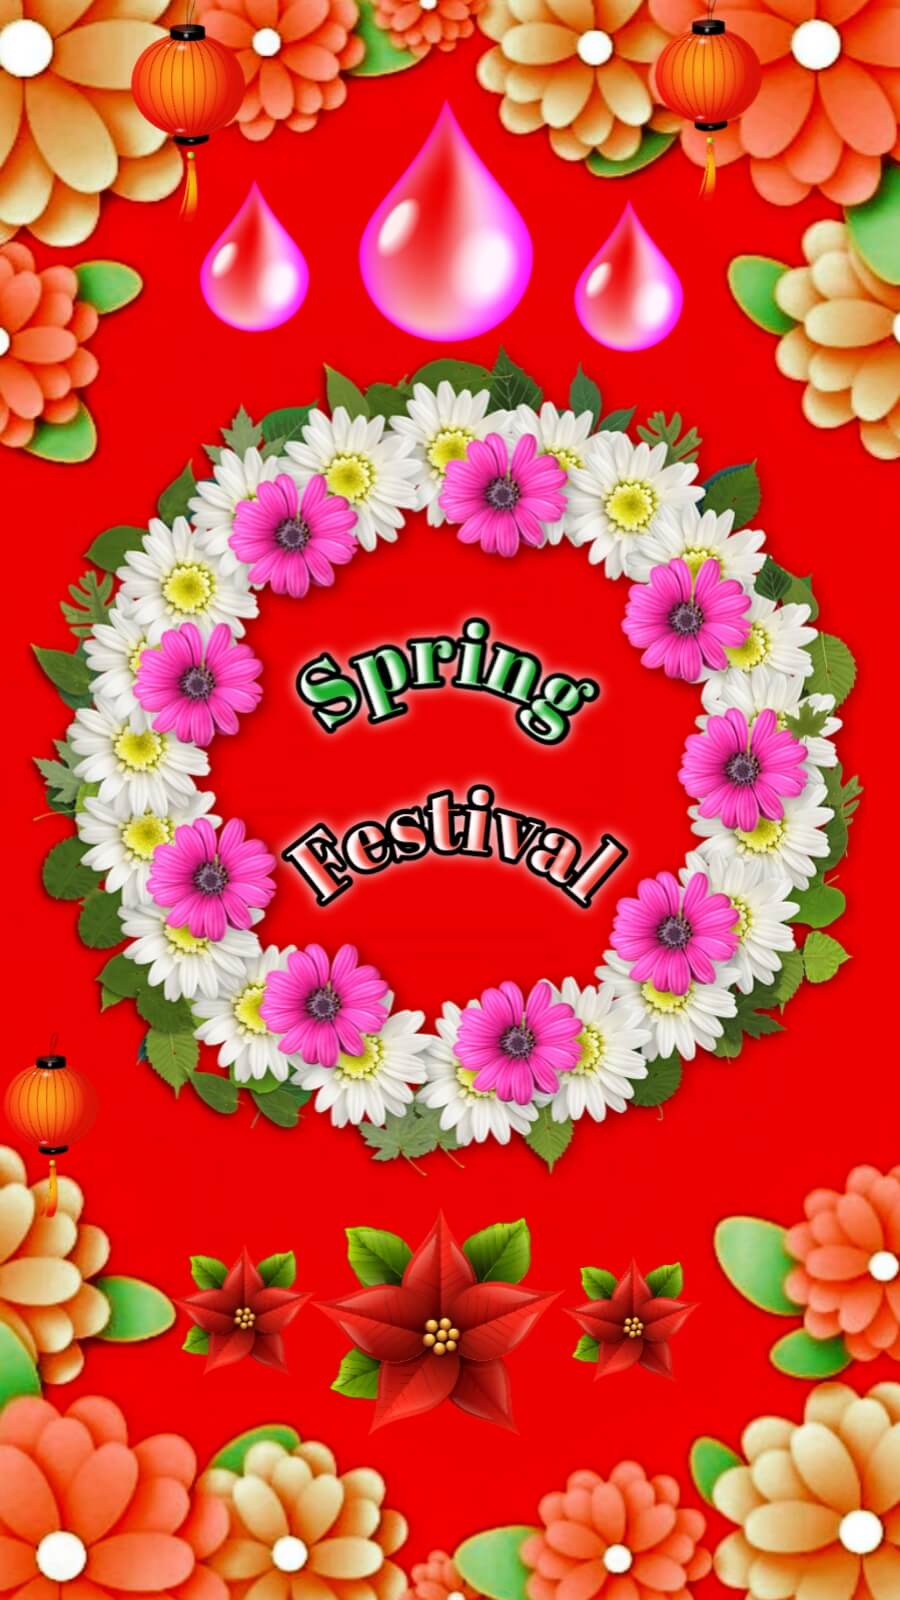 Best spring festival 2022 photo download